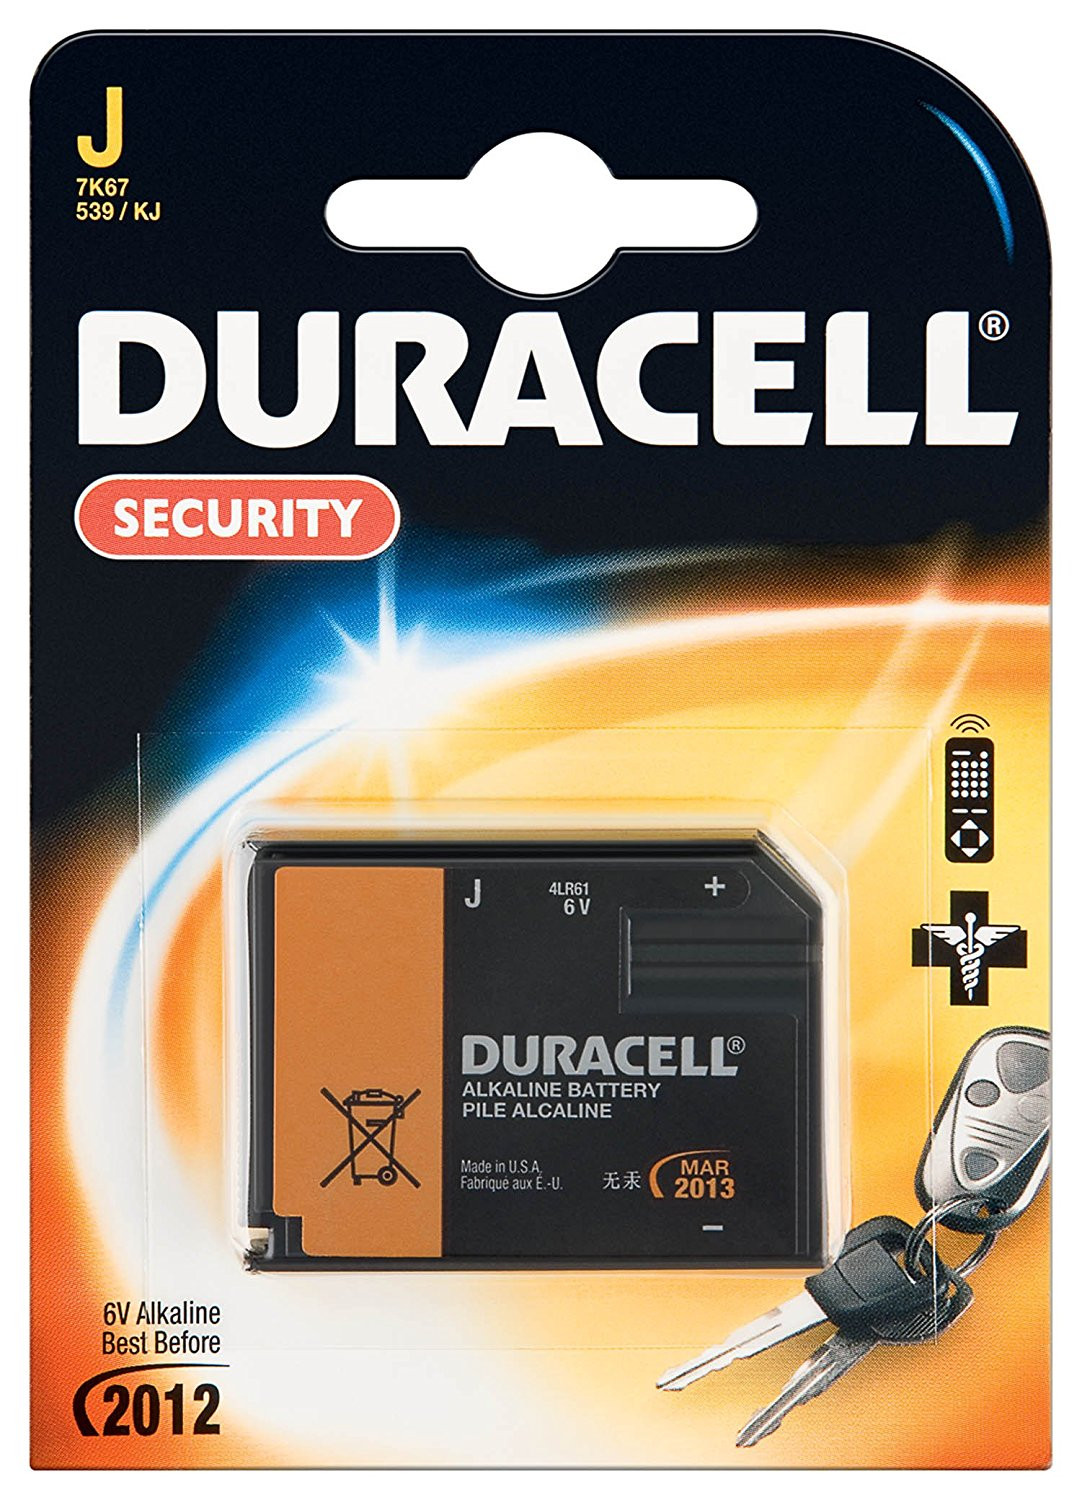 Duracell Security 7K67 - 1pk